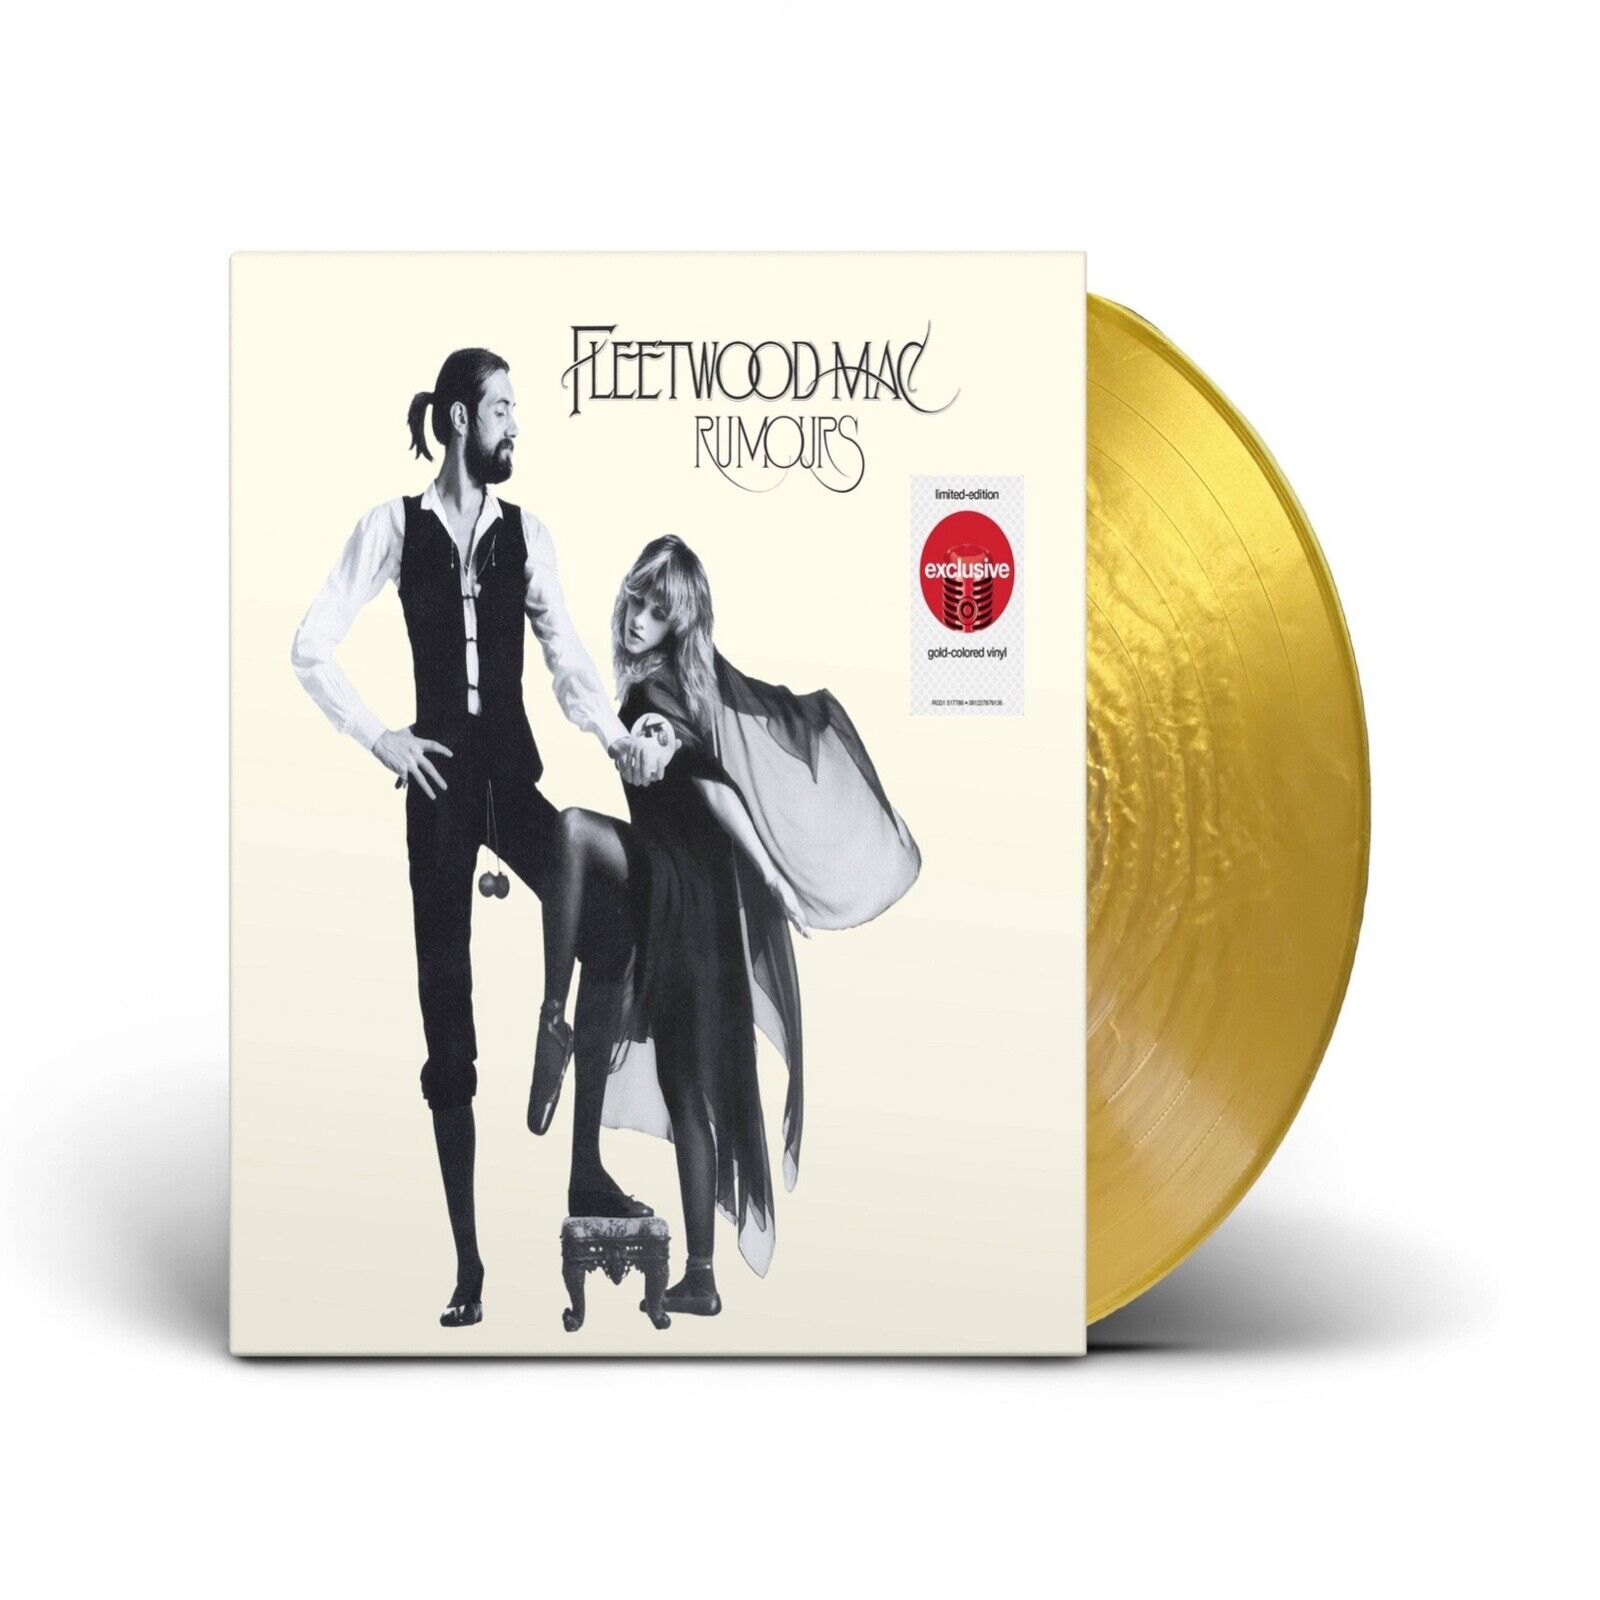 FLEETWOOD MAC RUMOURS GOLD COLORED VINYL LP